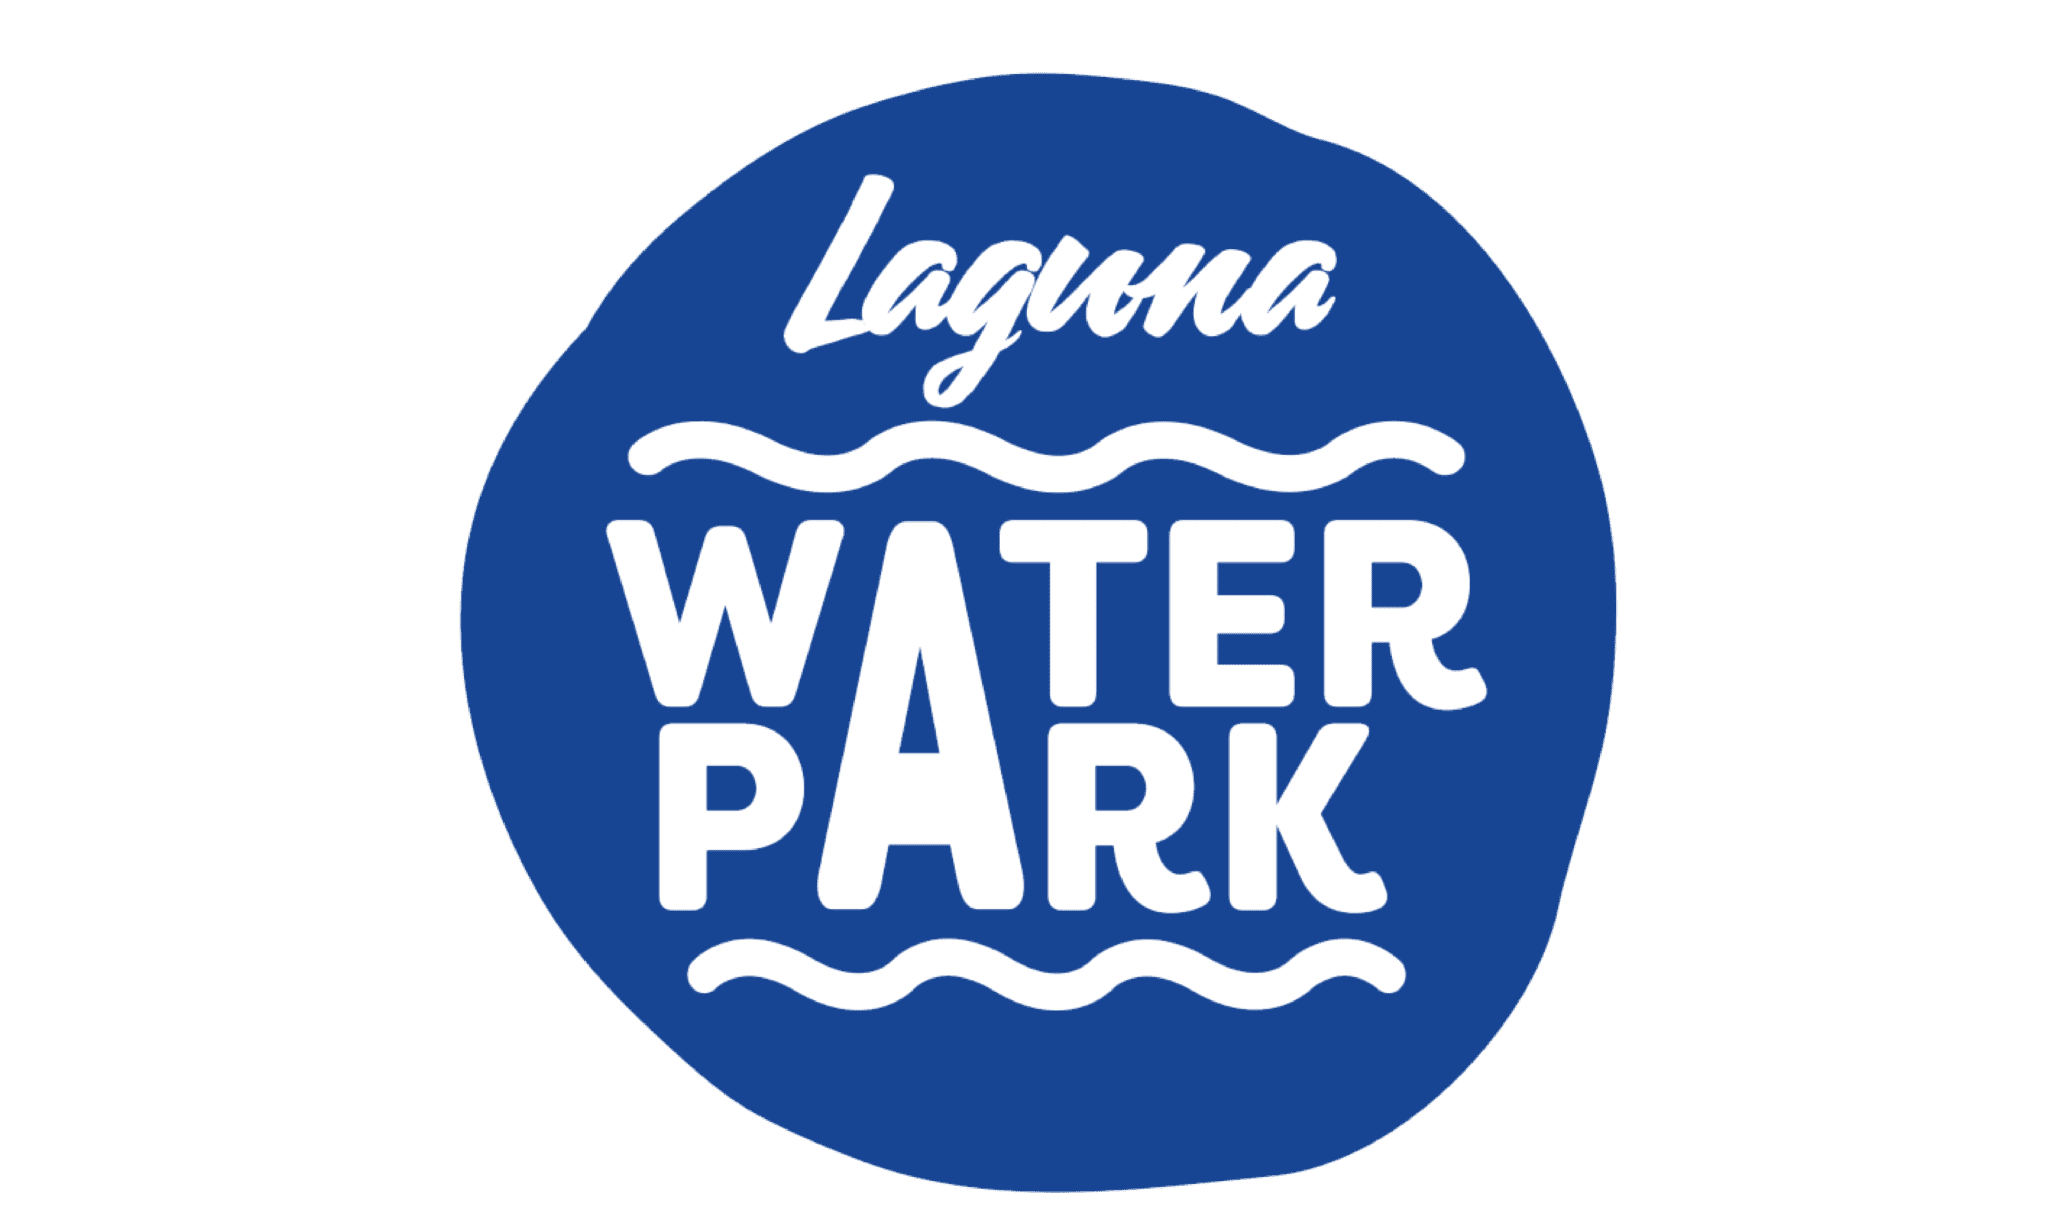 The lagona water park logo